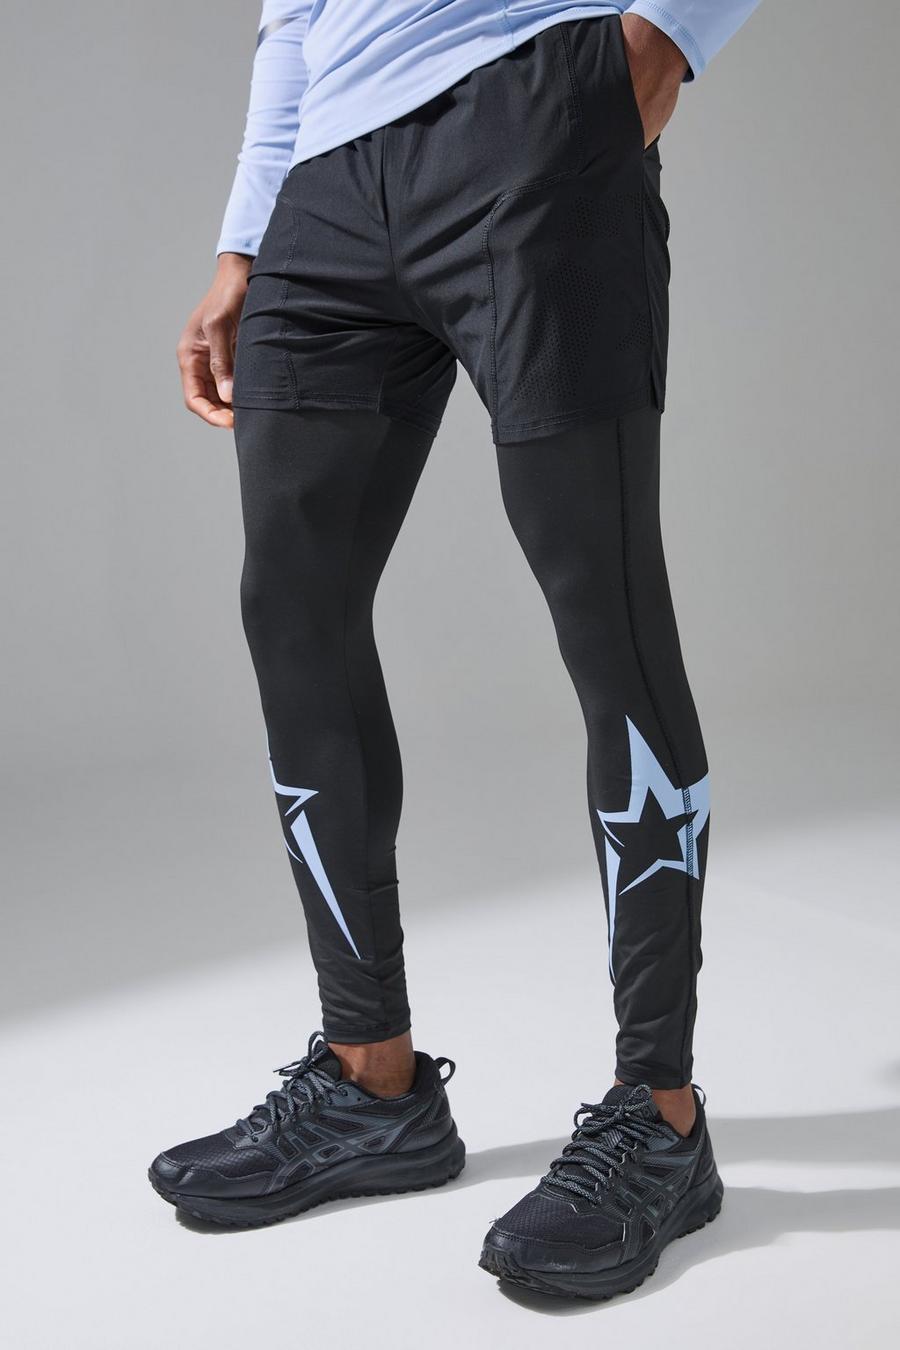 Pantalón corto de tela elástica con estampado Gunna Active, Black